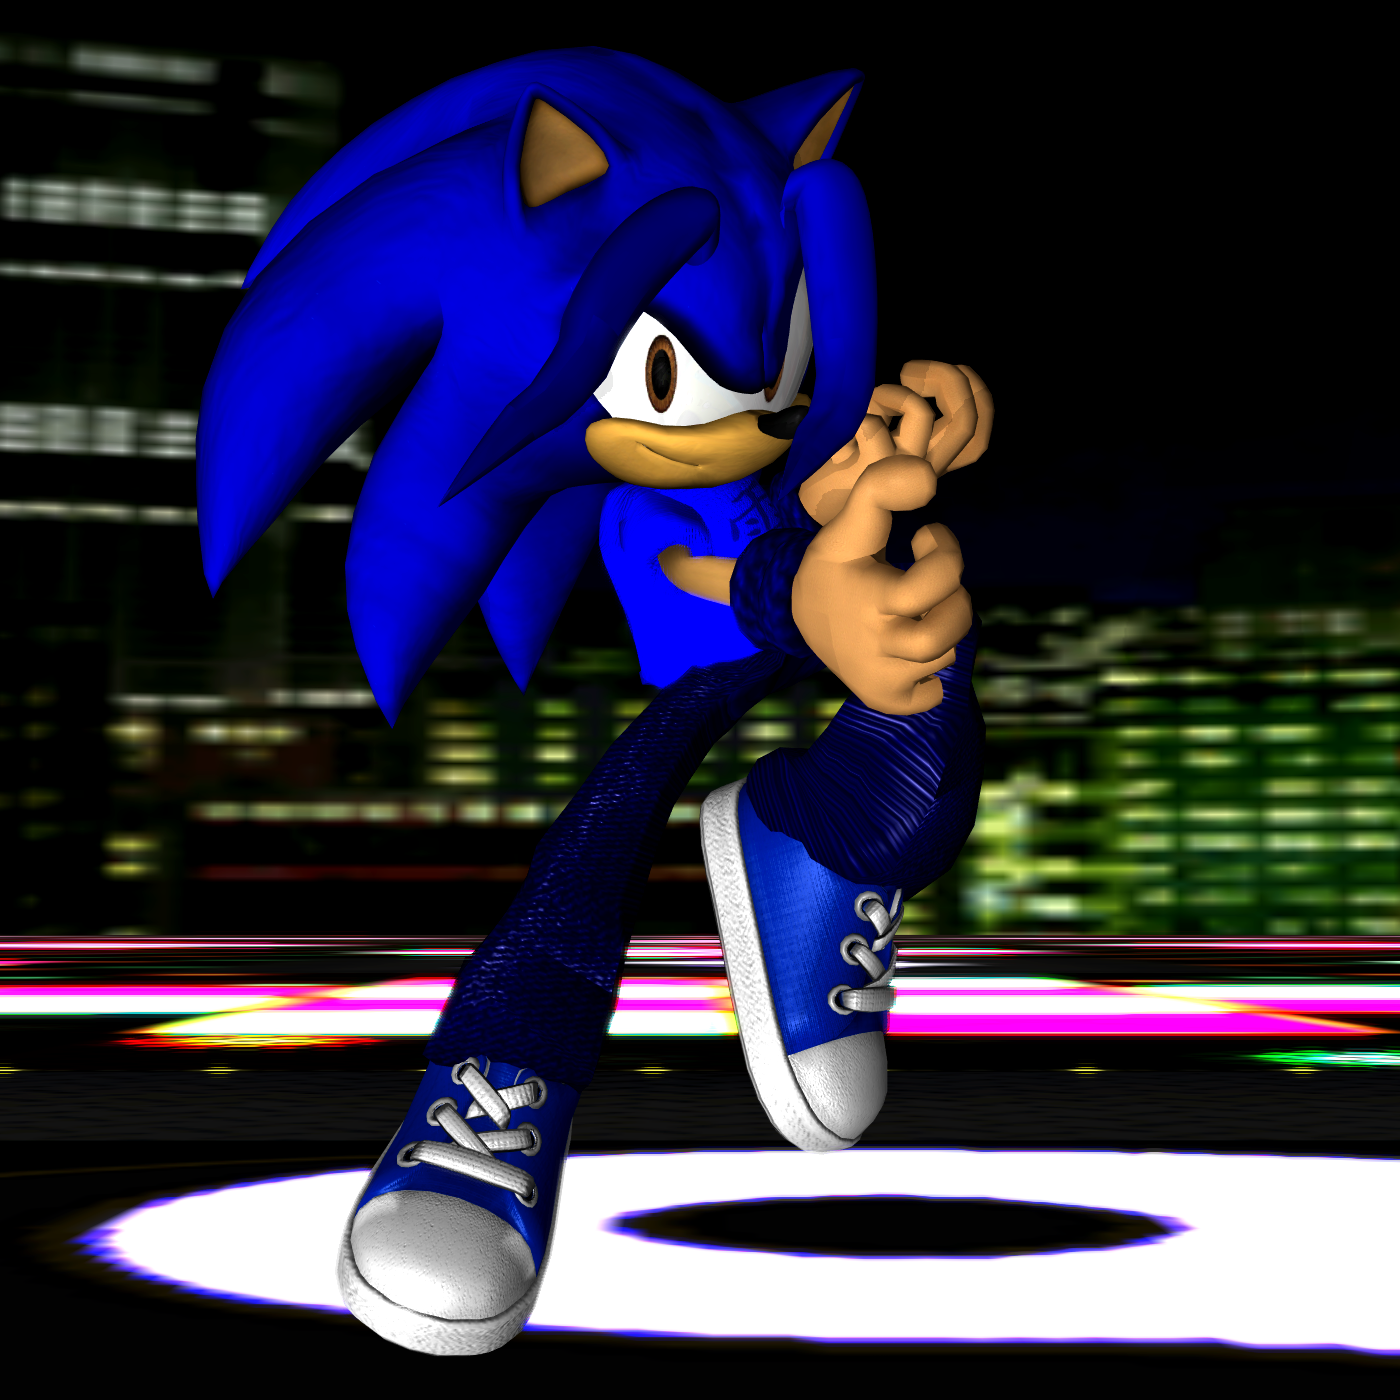 Sonic Advance 2 - Dark Sonic by Fal-The-Lynx on DeviantArt